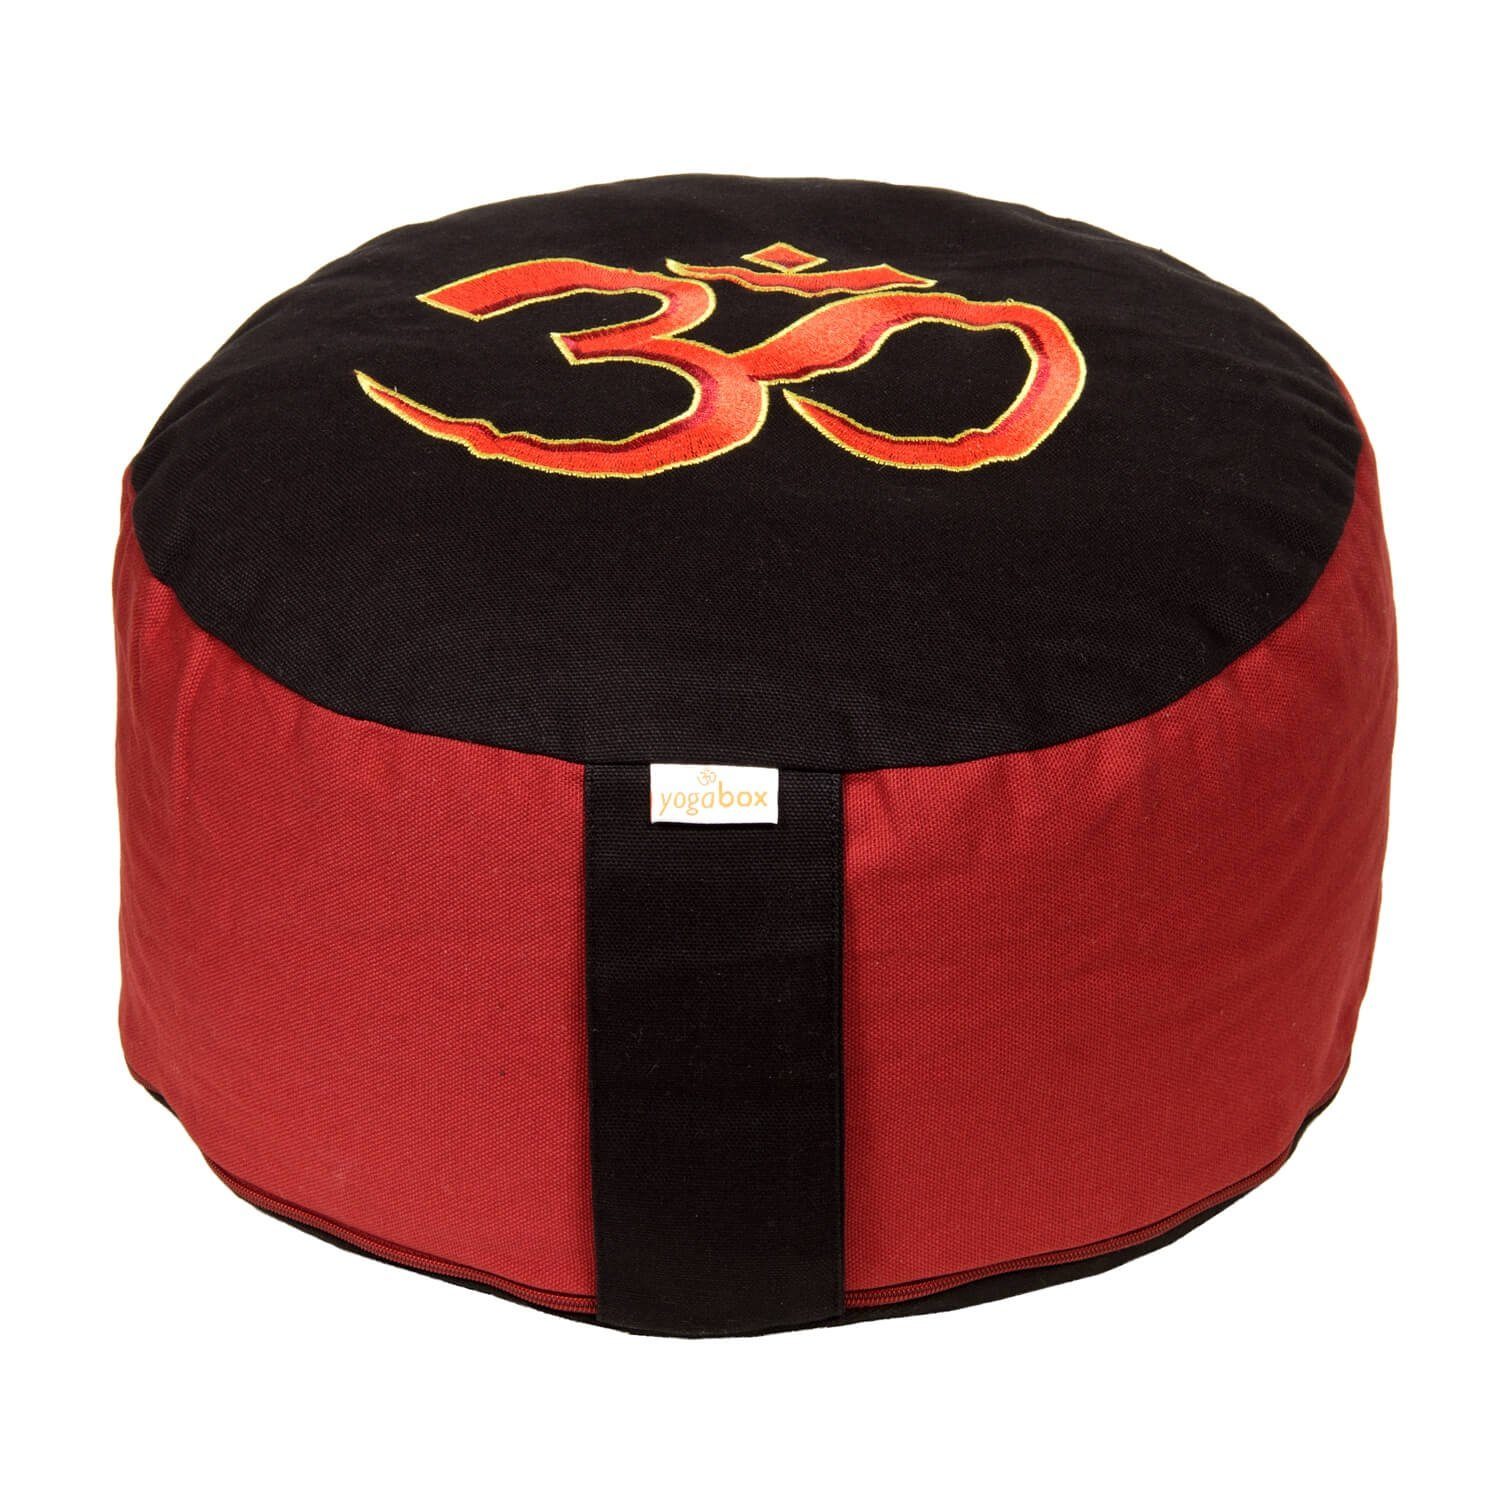 schwarz rot / yogabox mit Yogakissen Glückssitz OM-Symbol